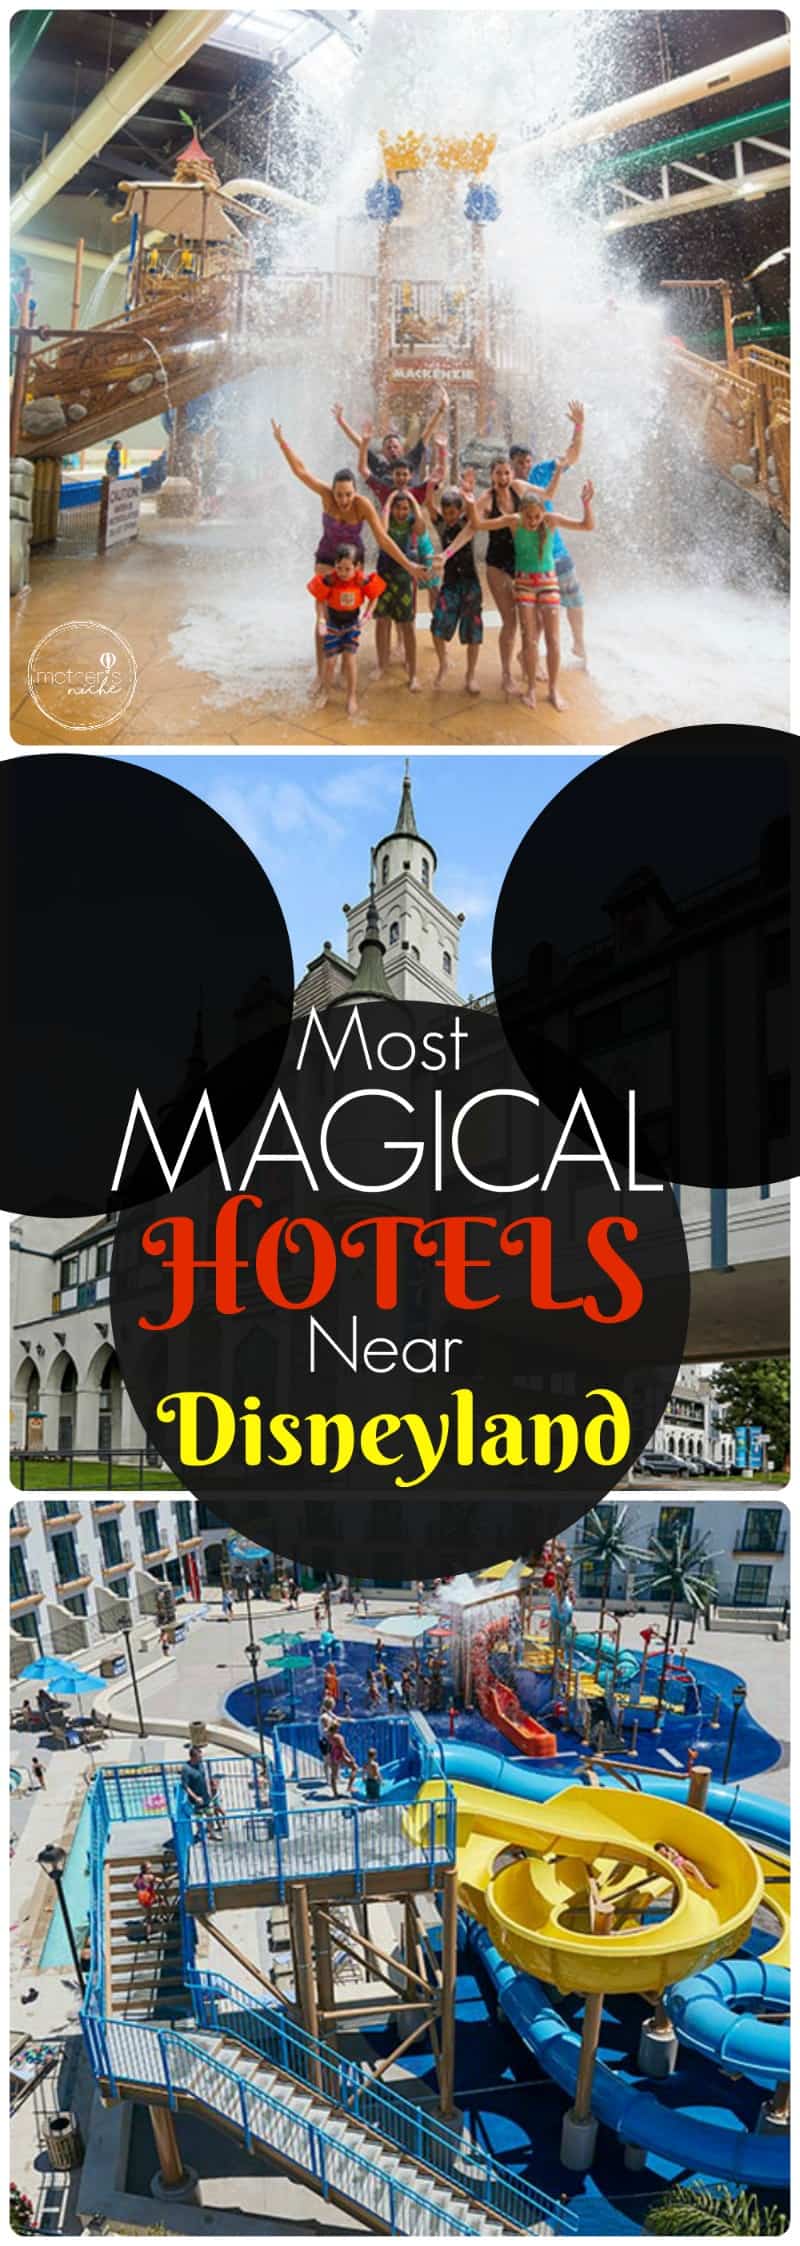 Magical Hotels Near Disneyland